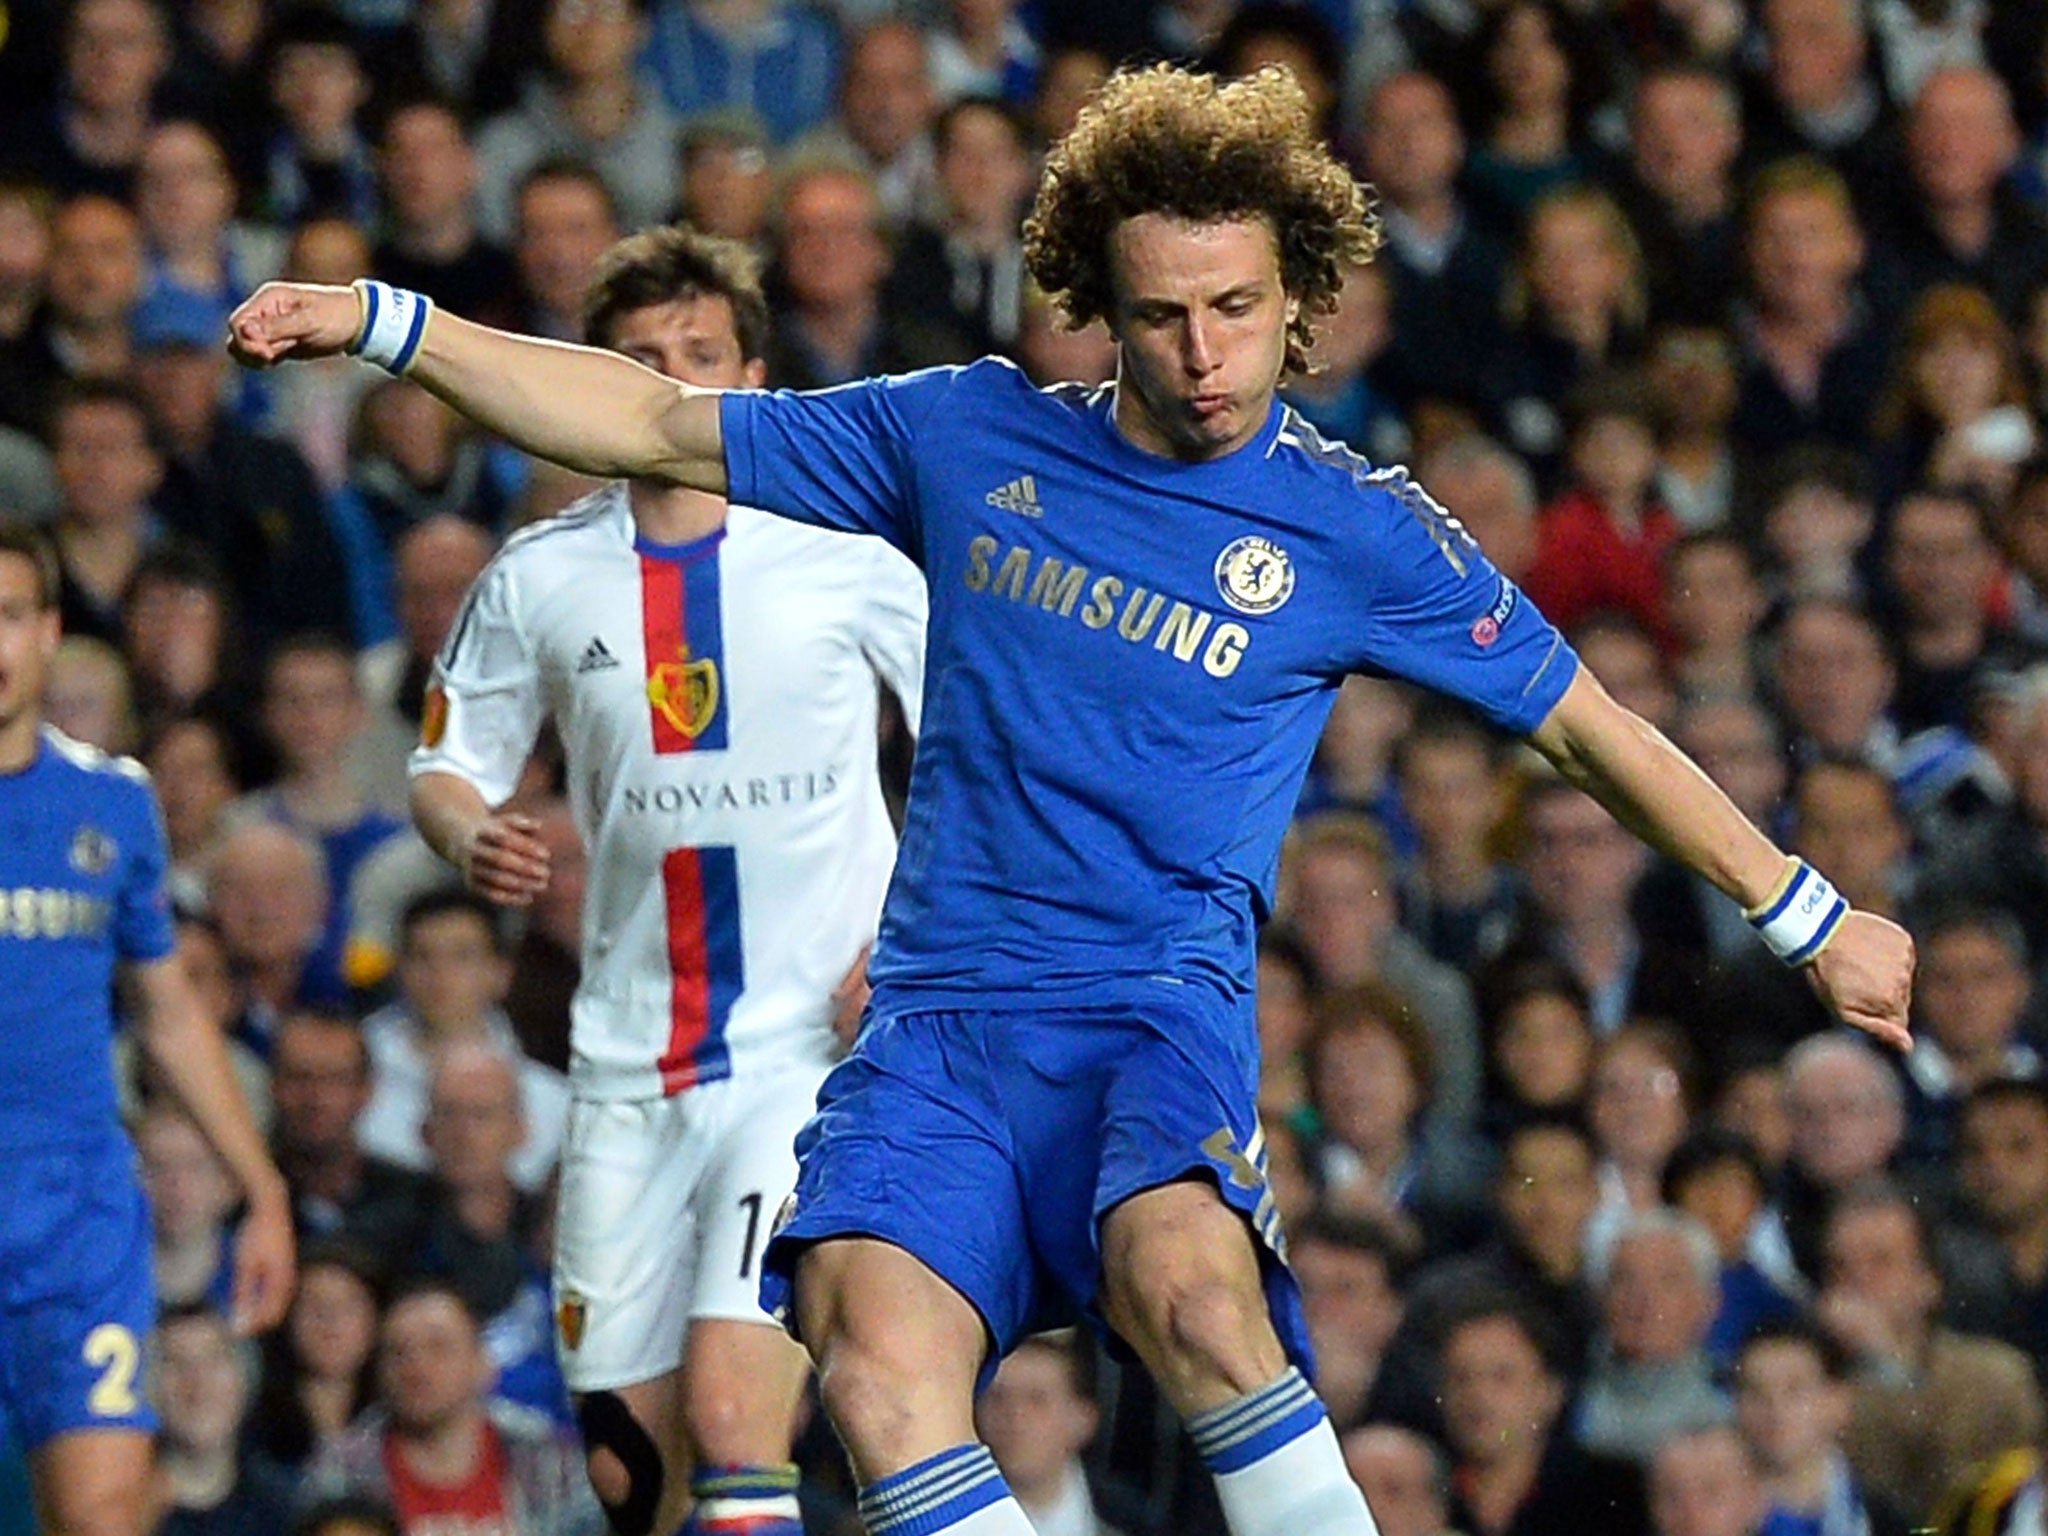 David Luiz hits another impressive goal for Chelsea at Stamford Bridge